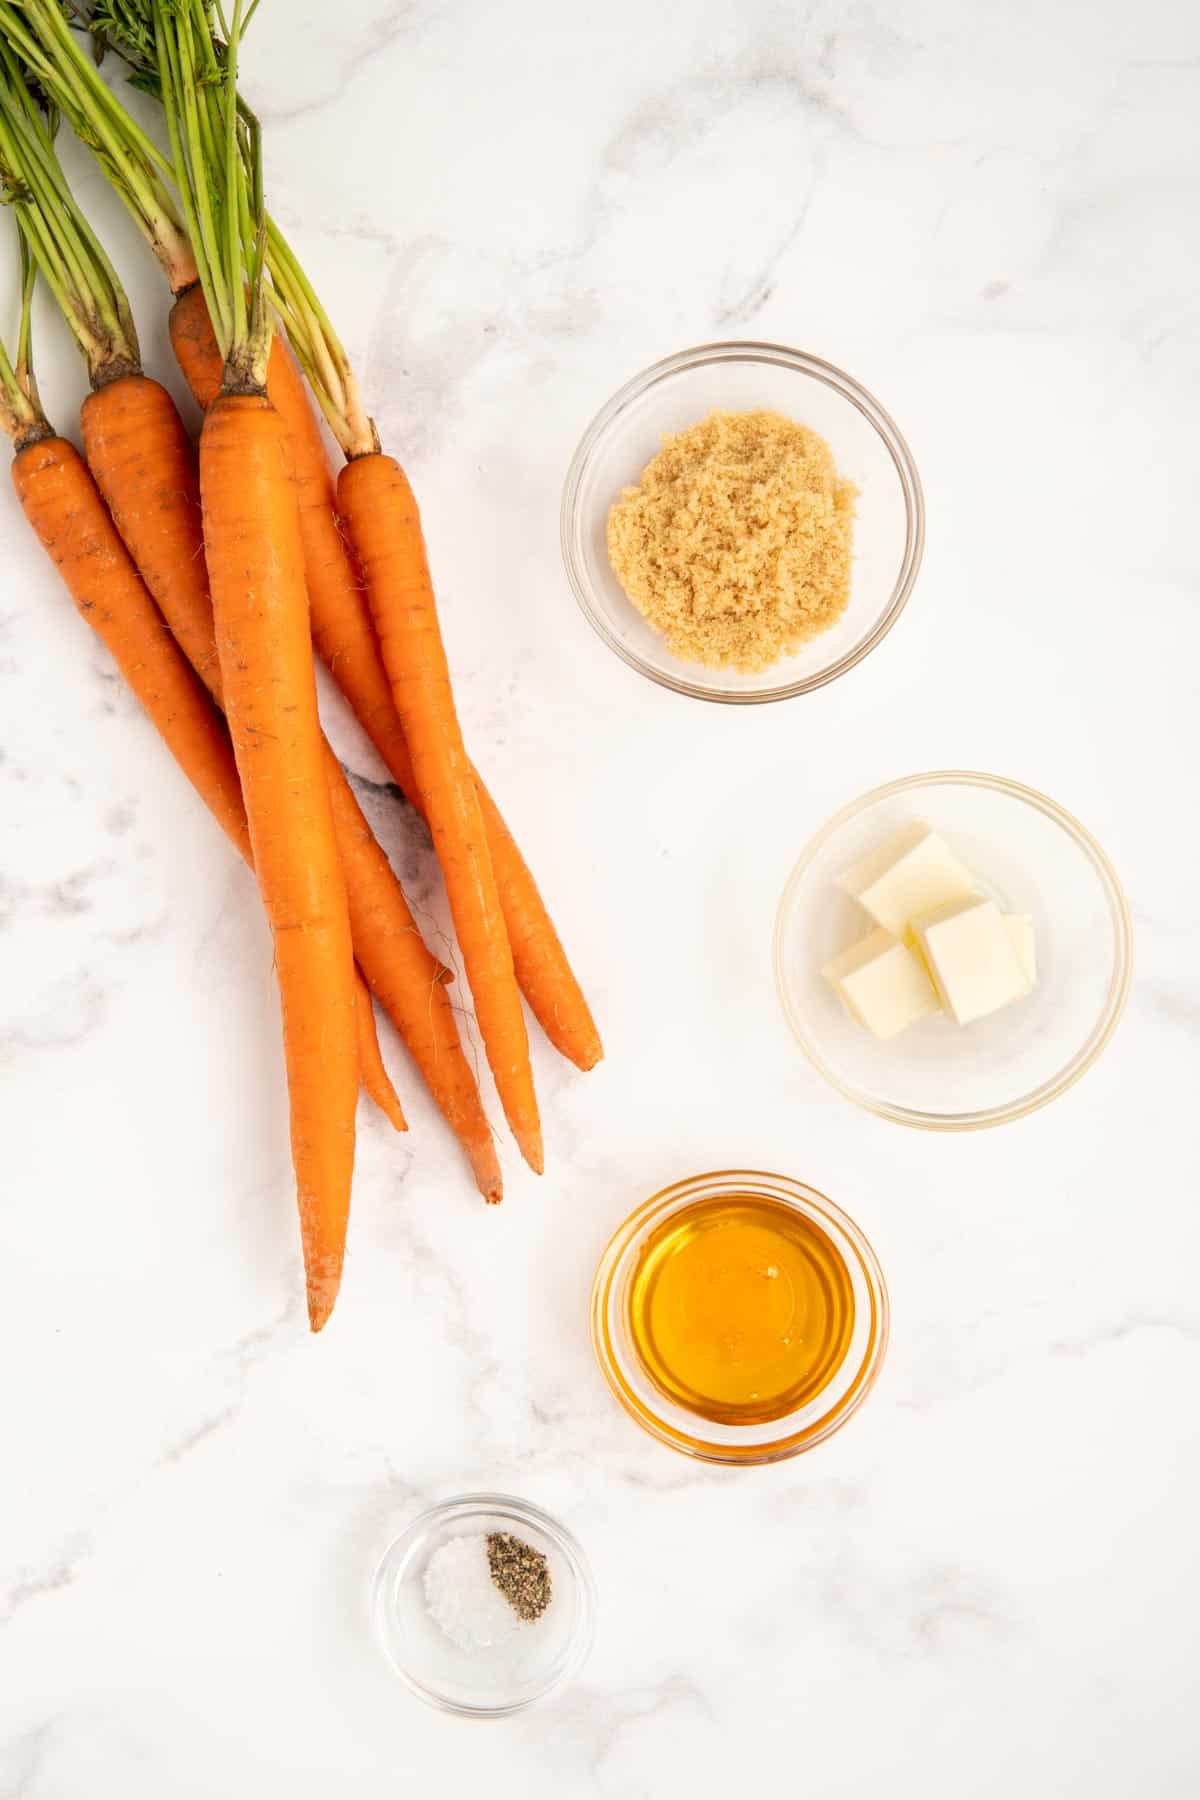 Ingredients needed to make brown sugar honey glazed carrots.